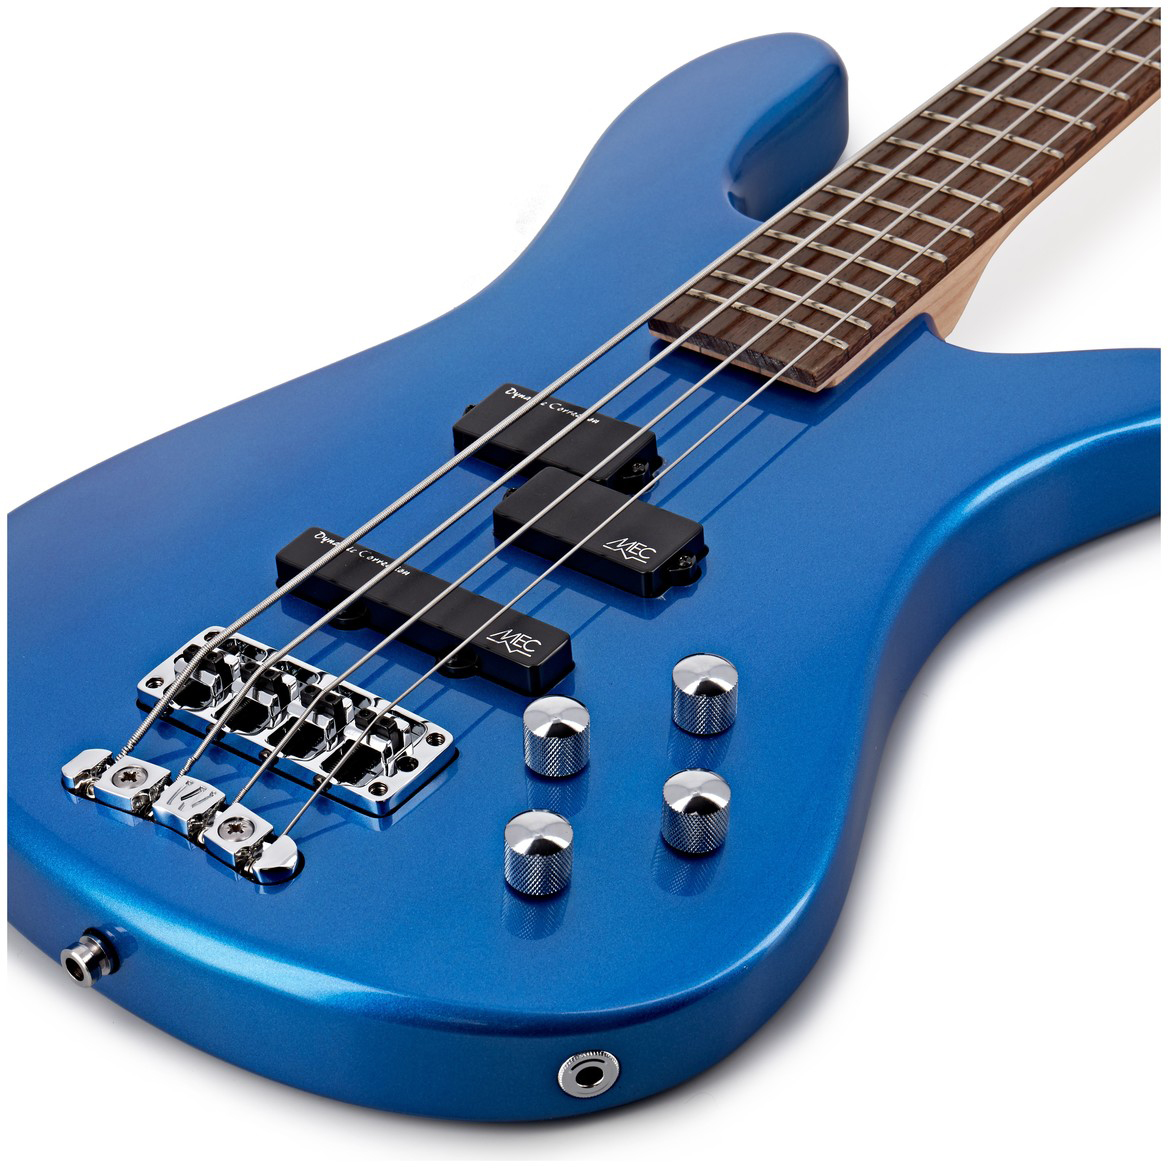 Warwick Streamer Lx4 Rockbass Active Wen - Solid Blue Metallic - Solidbody E-bass - Variation 3